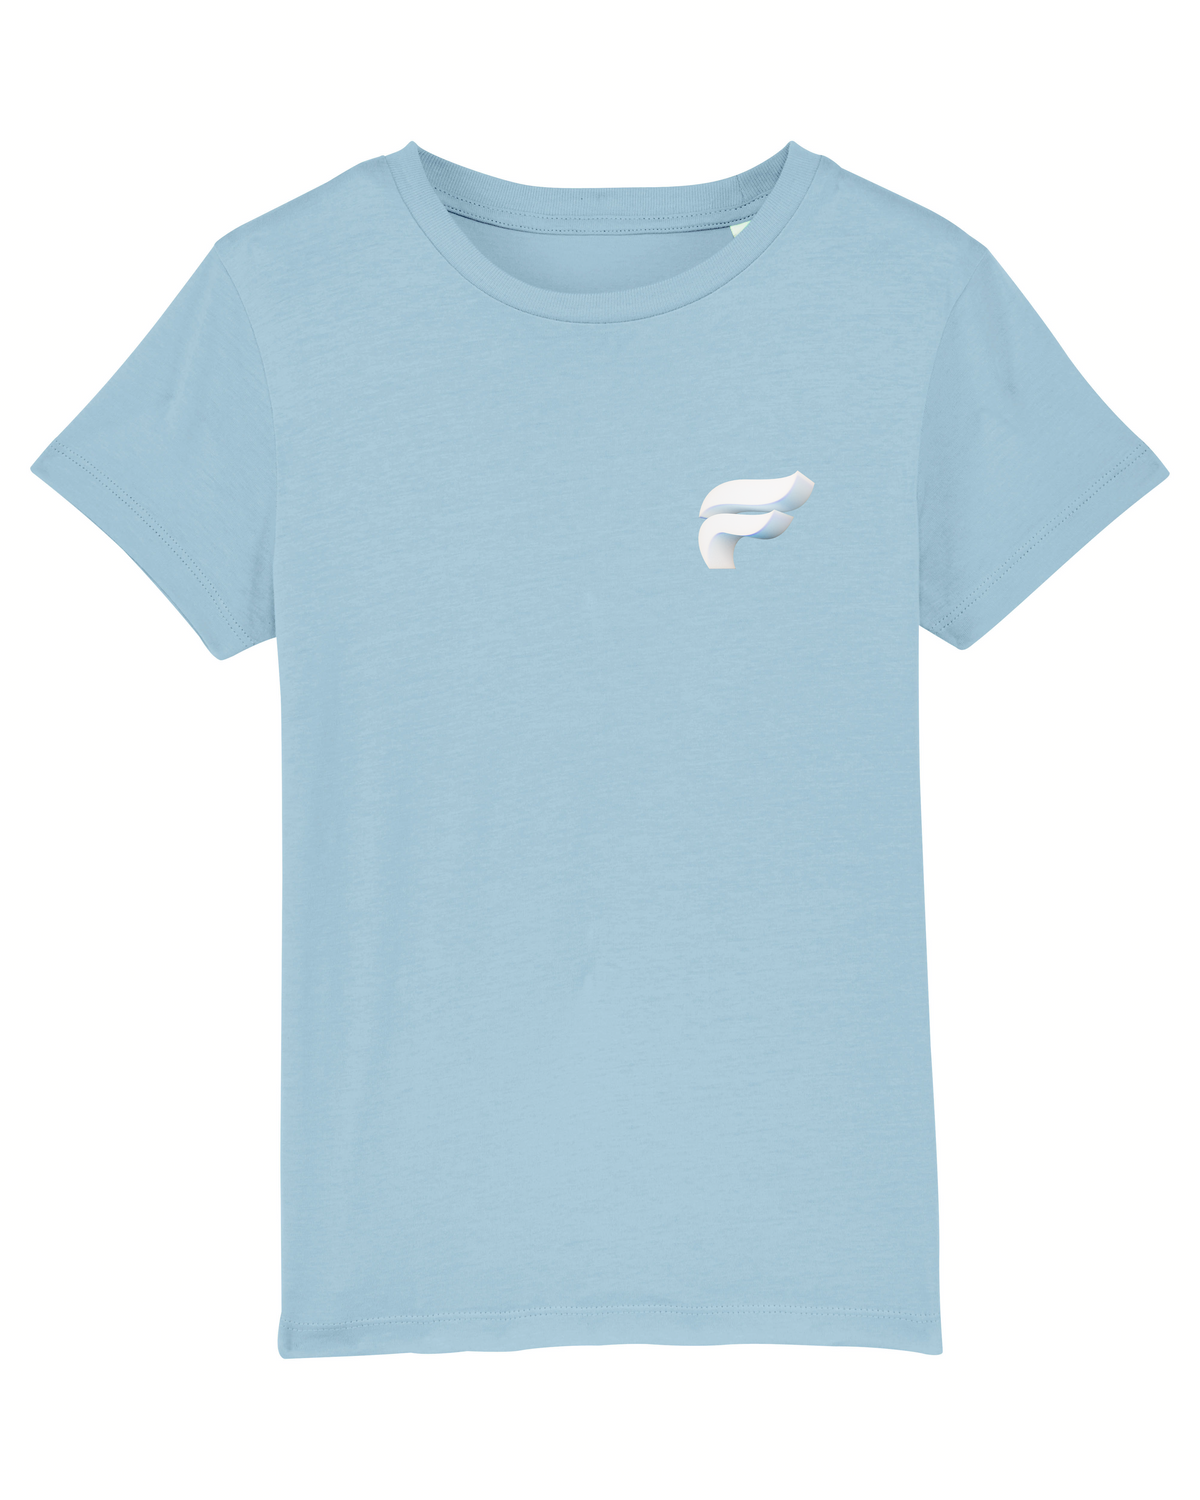 T-shirt Fuze Wave enfant